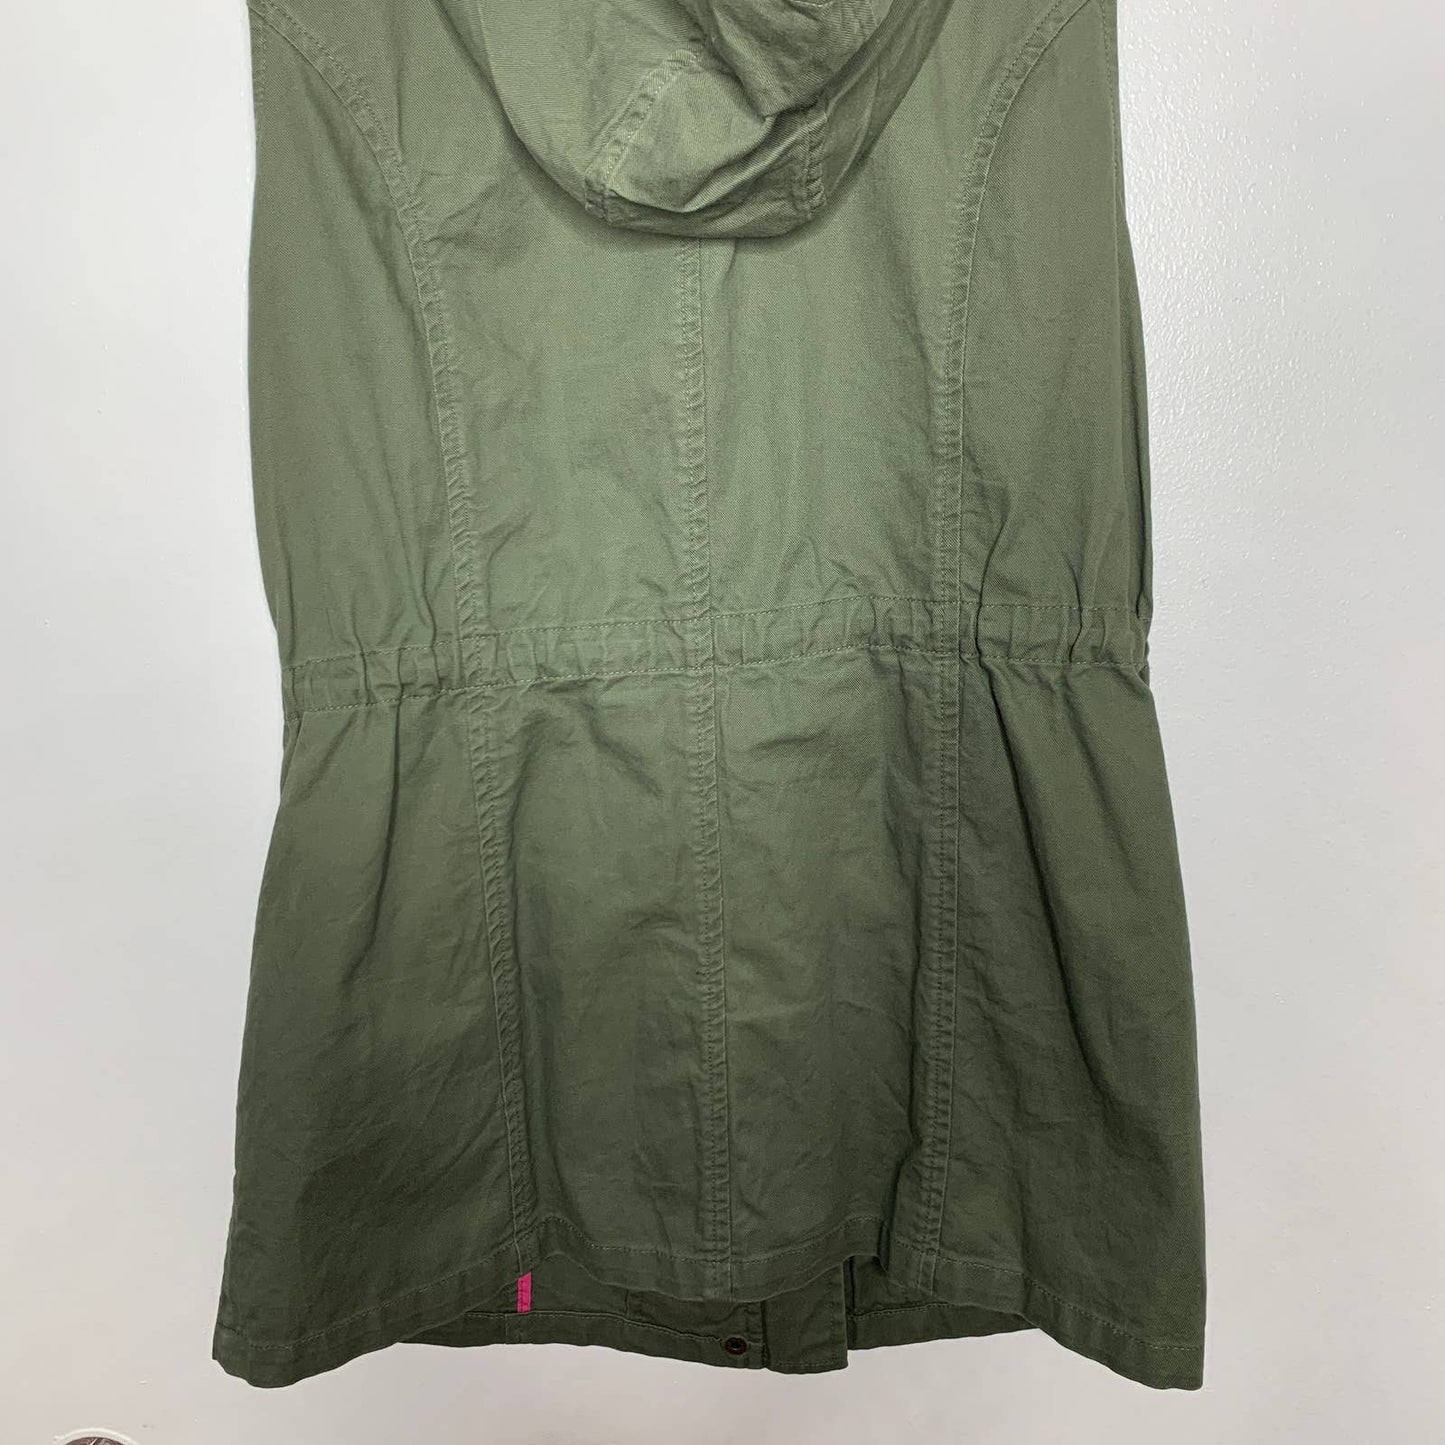 Jahana green hooded cargo pocket utility vest SZ S